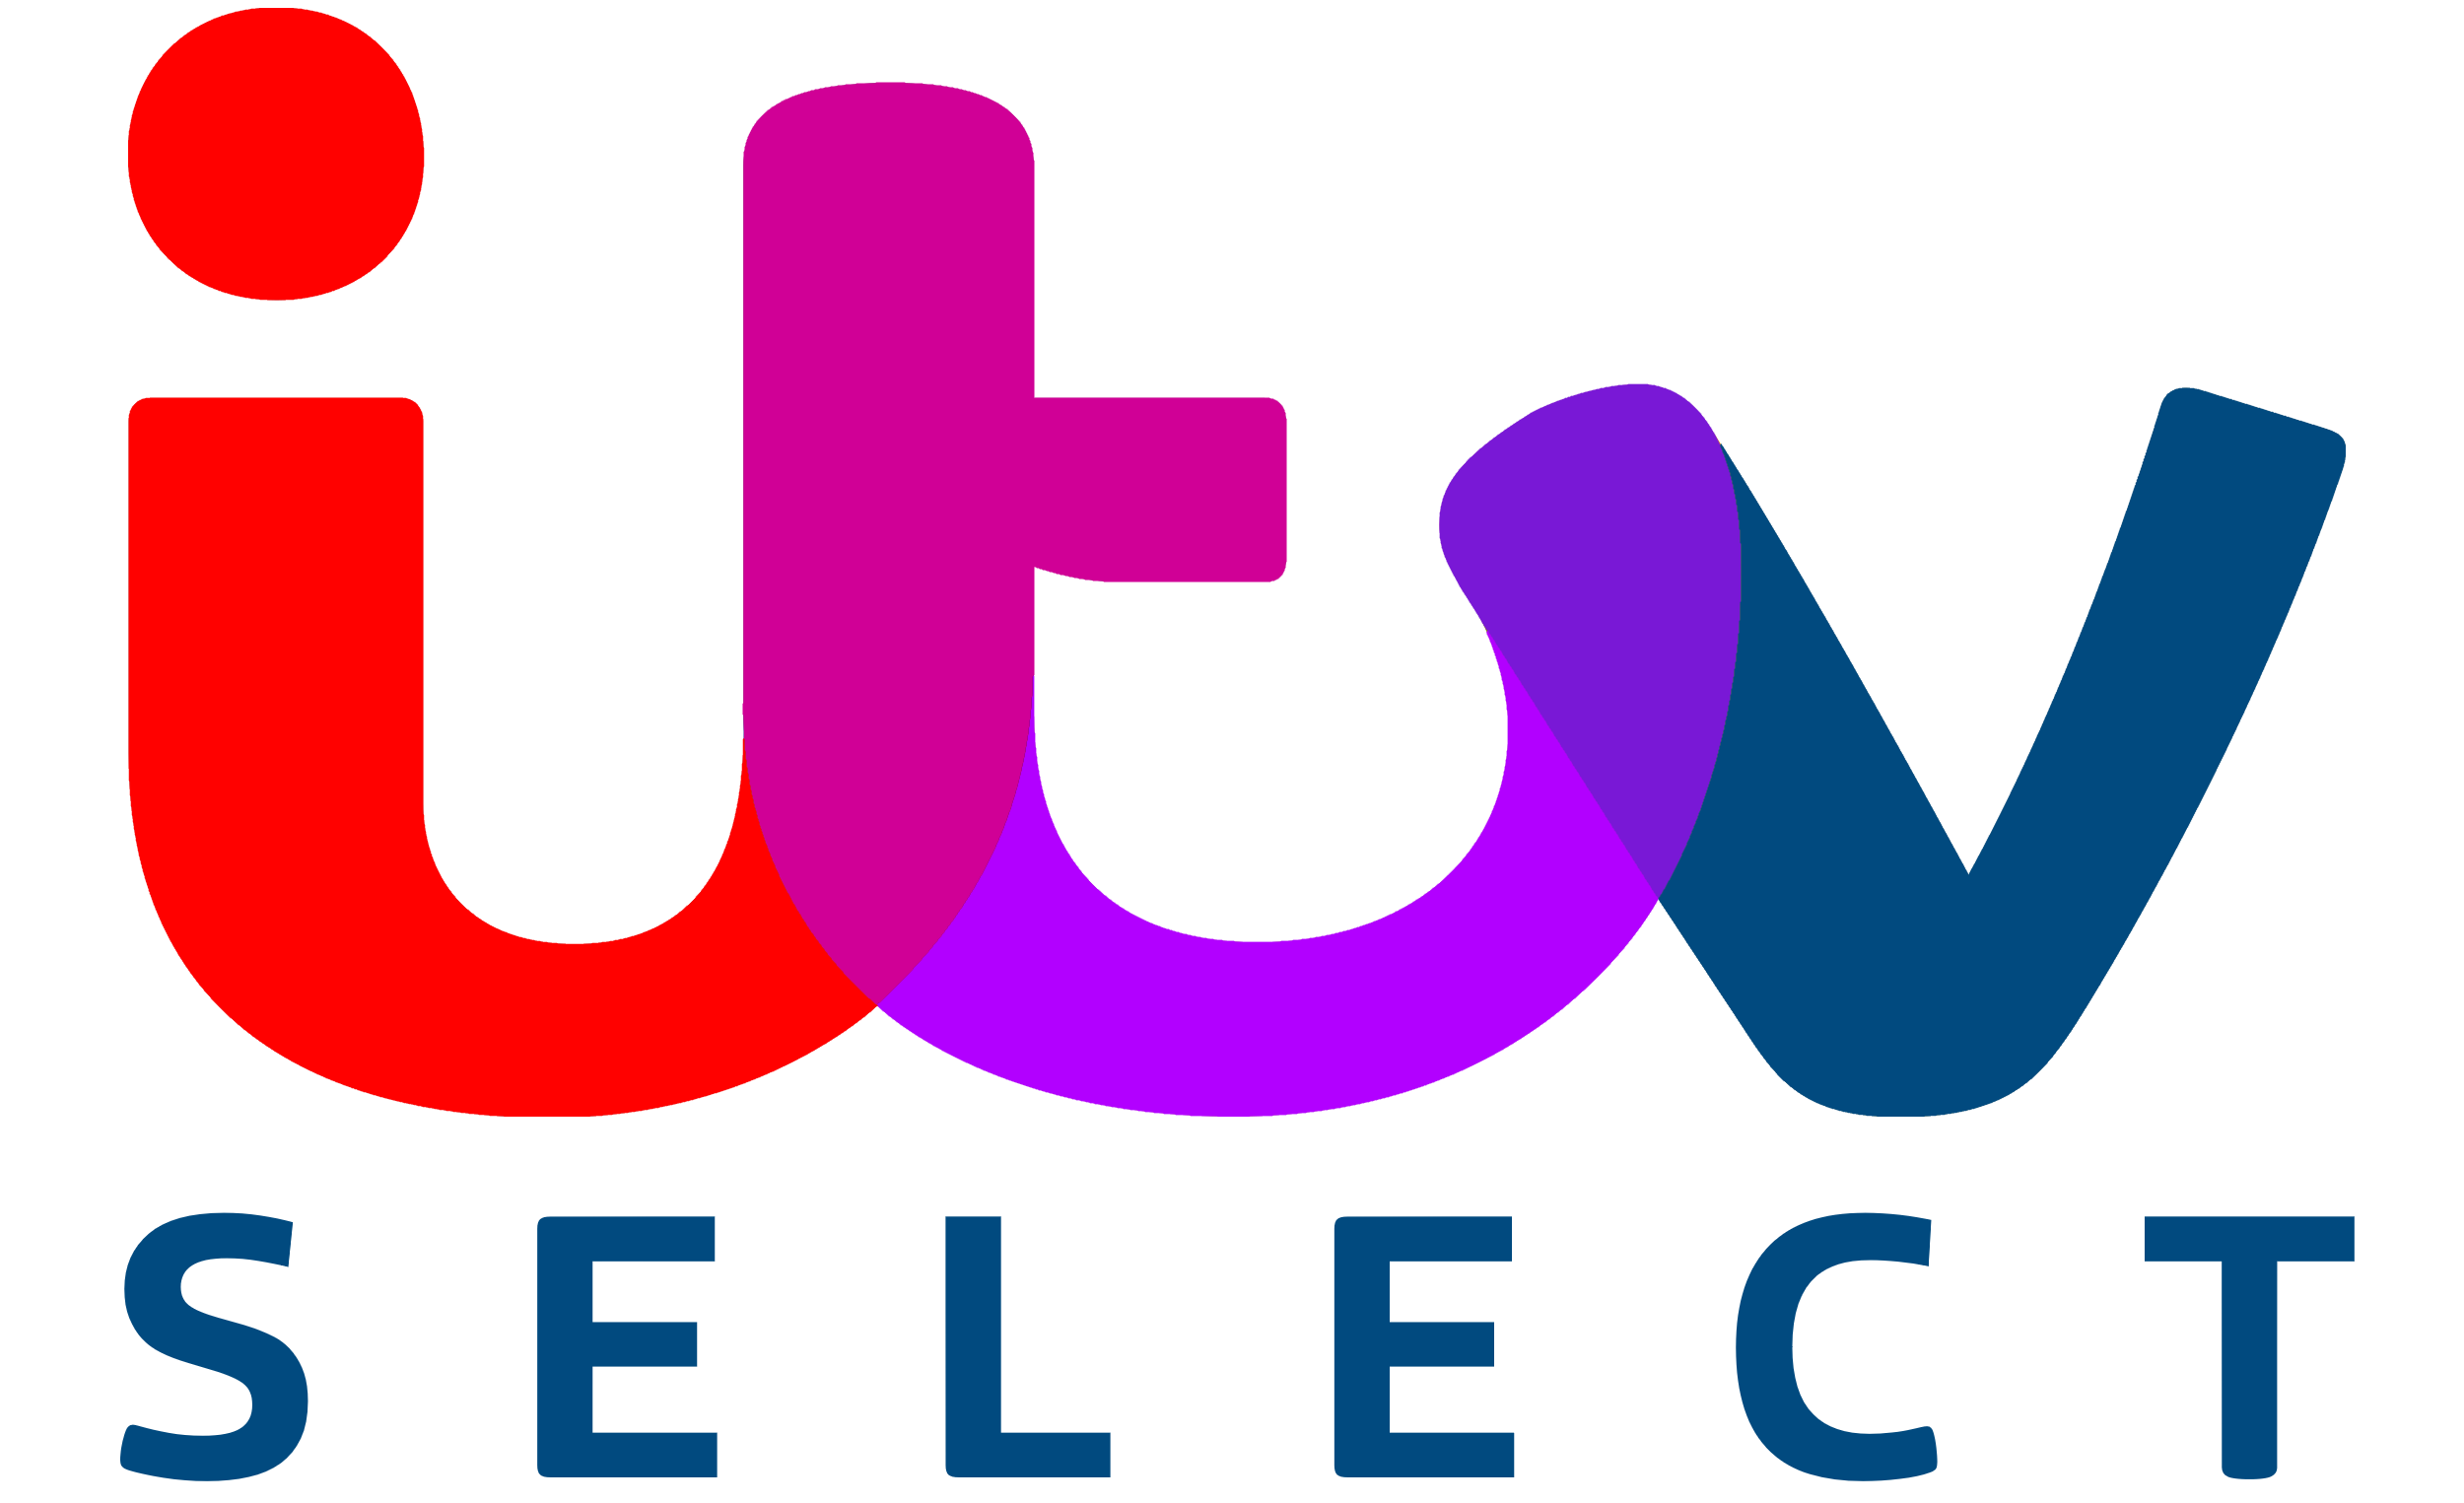 Image  ITV Select current logo.png  Logofanonpedia  FANDOM powered